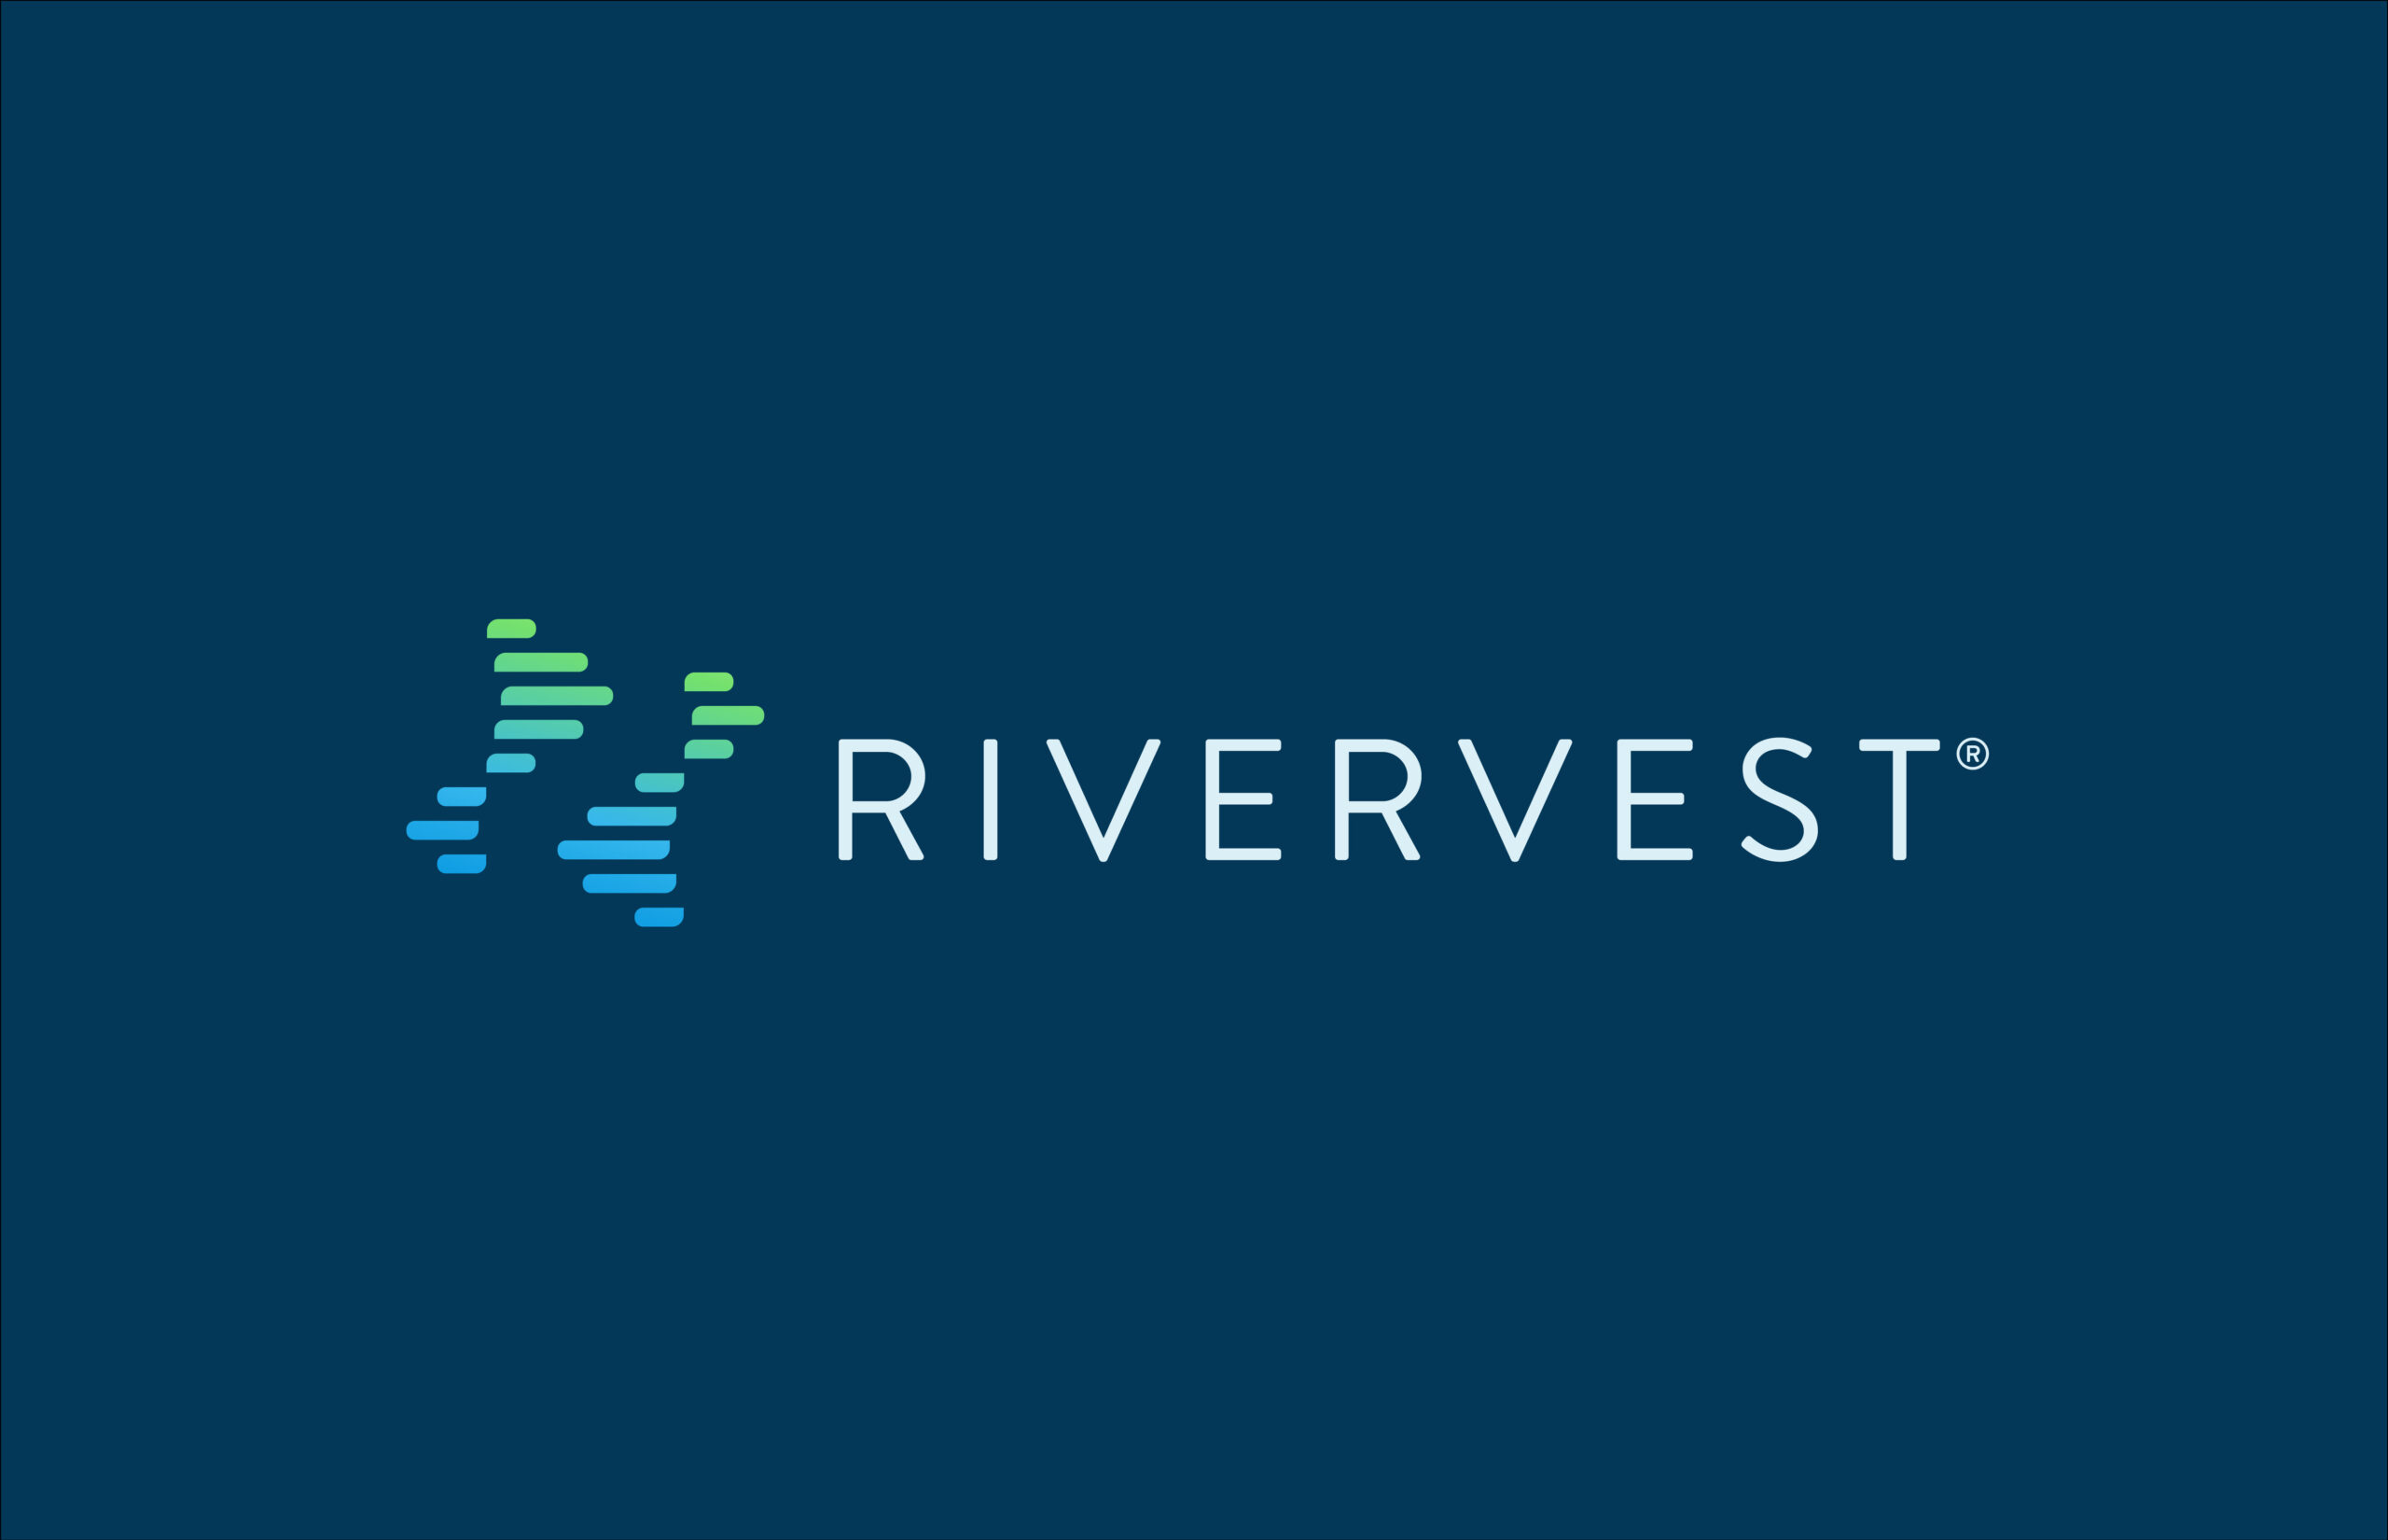 RiverVest logo blue background